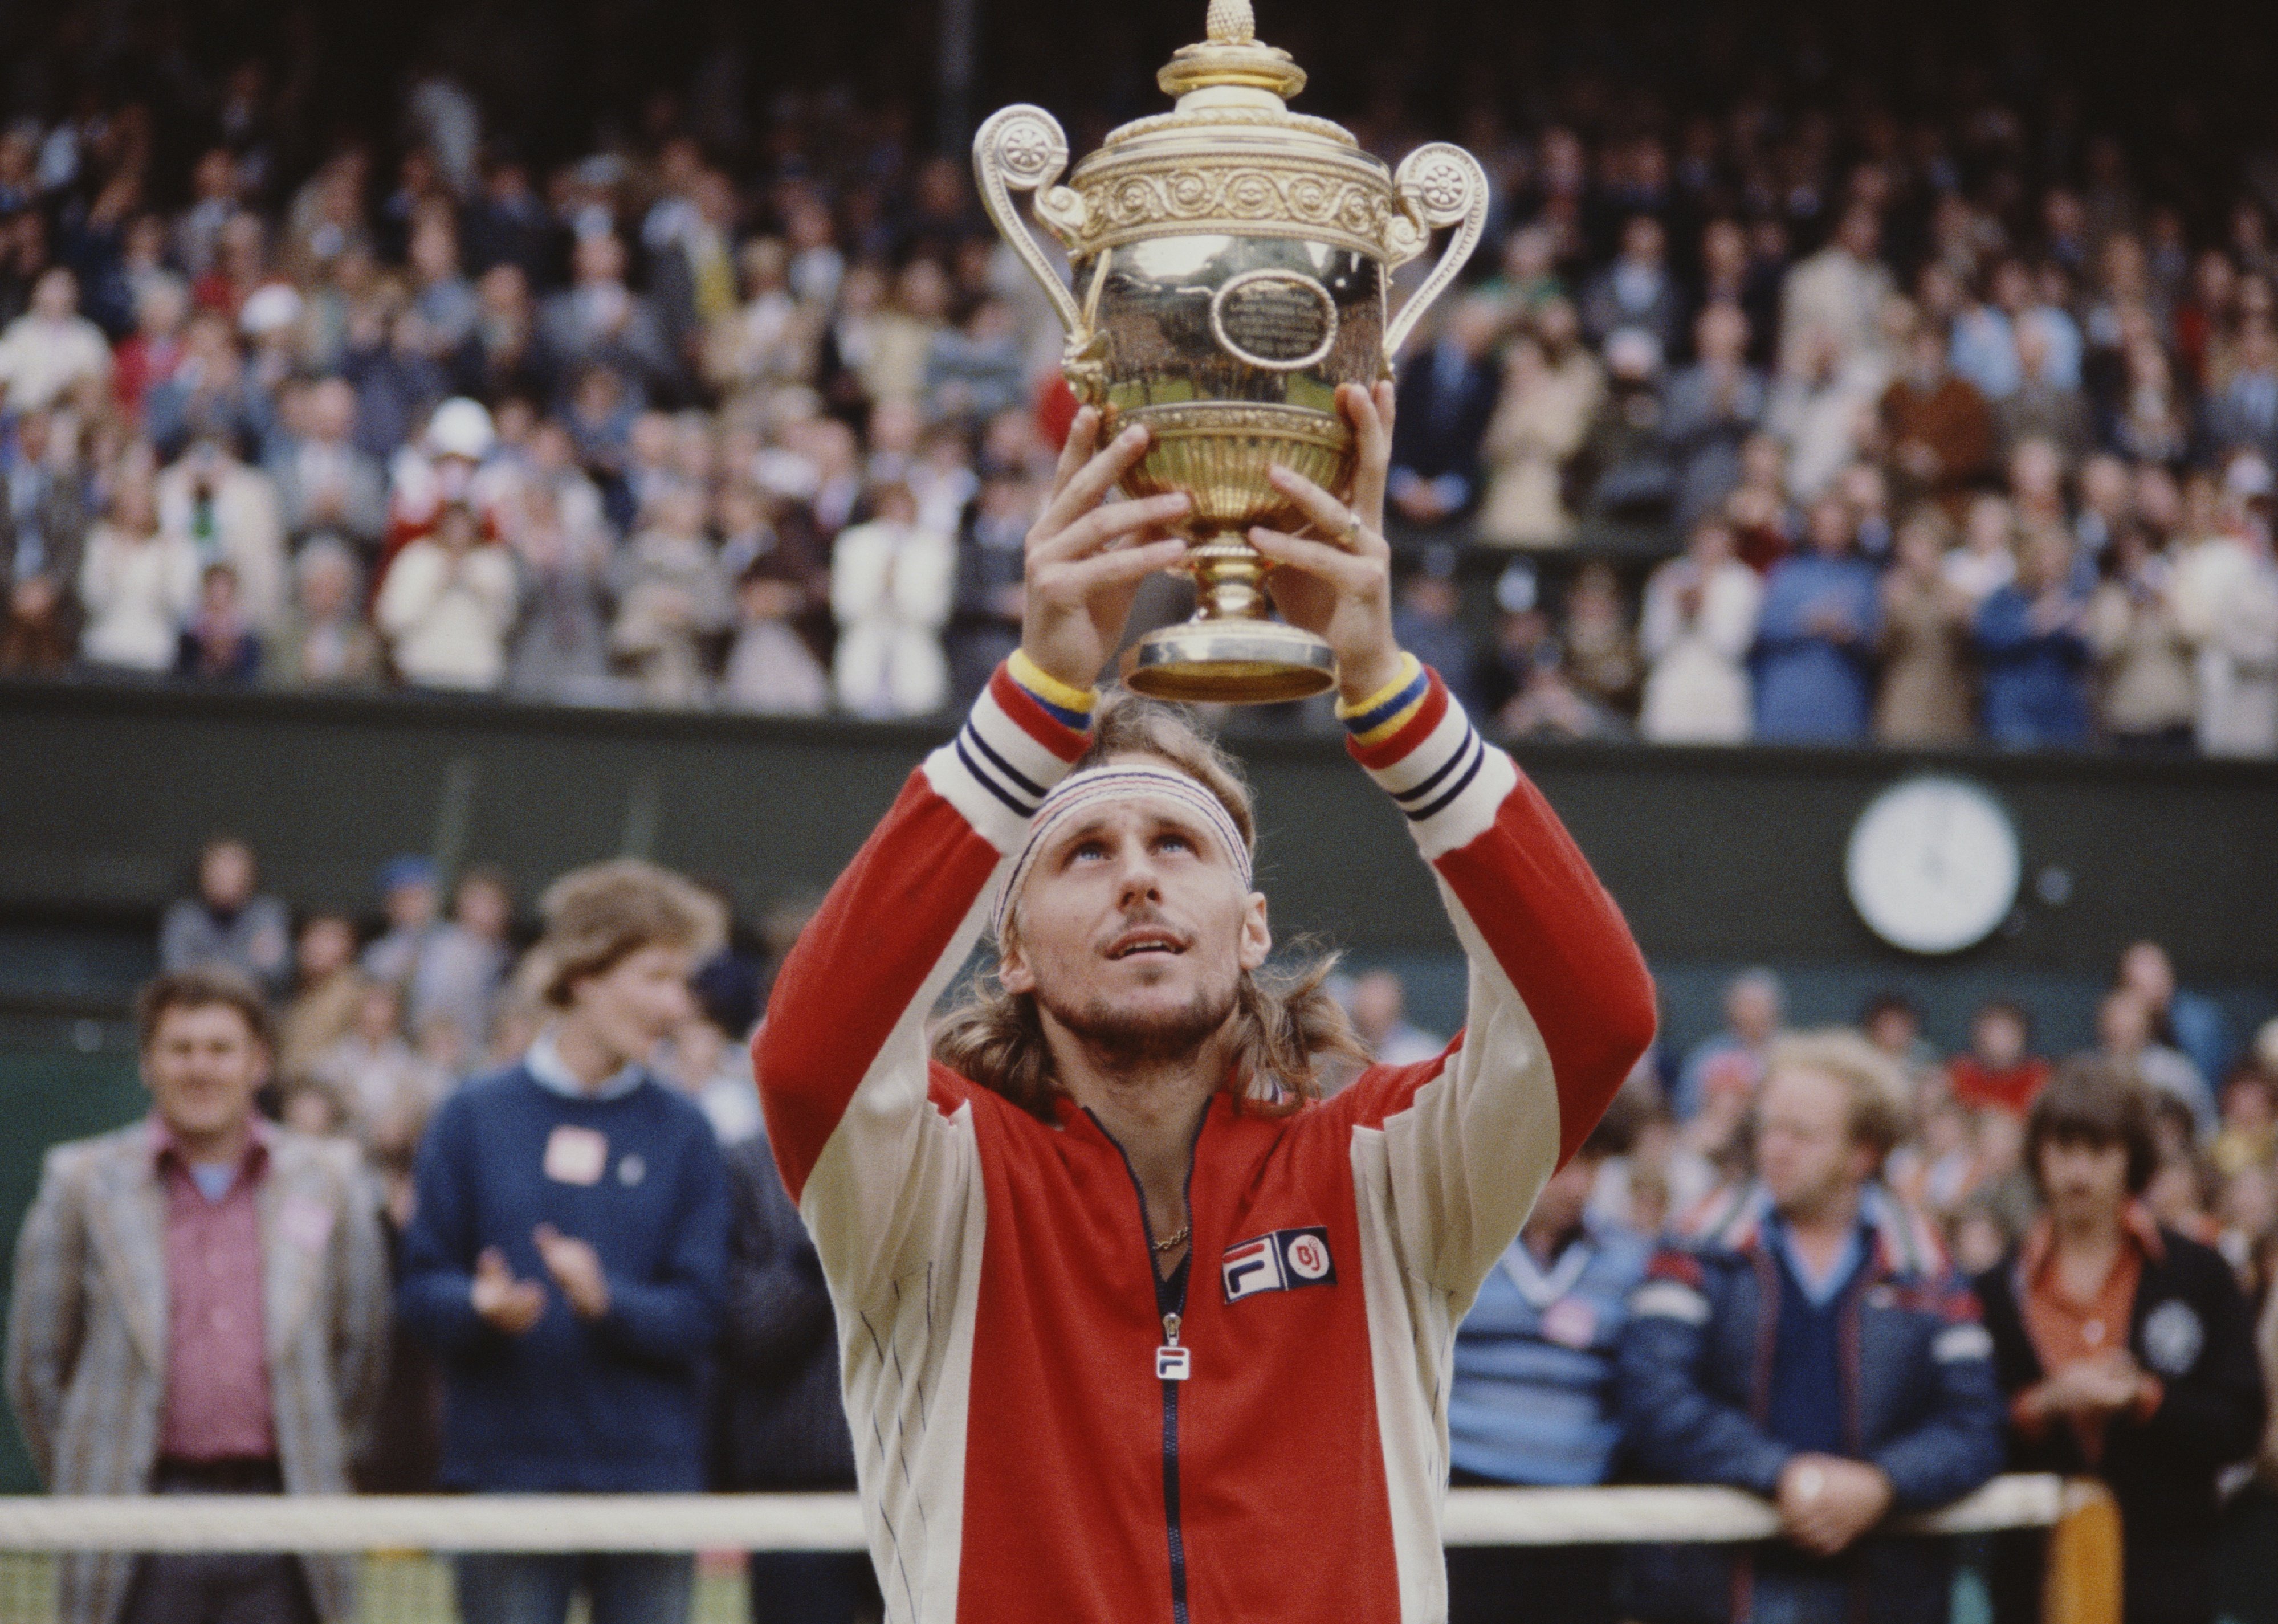 Björn Borg holds the trophy aloft after winning the 1978 Wimbledon Lawn Tennis Championship.